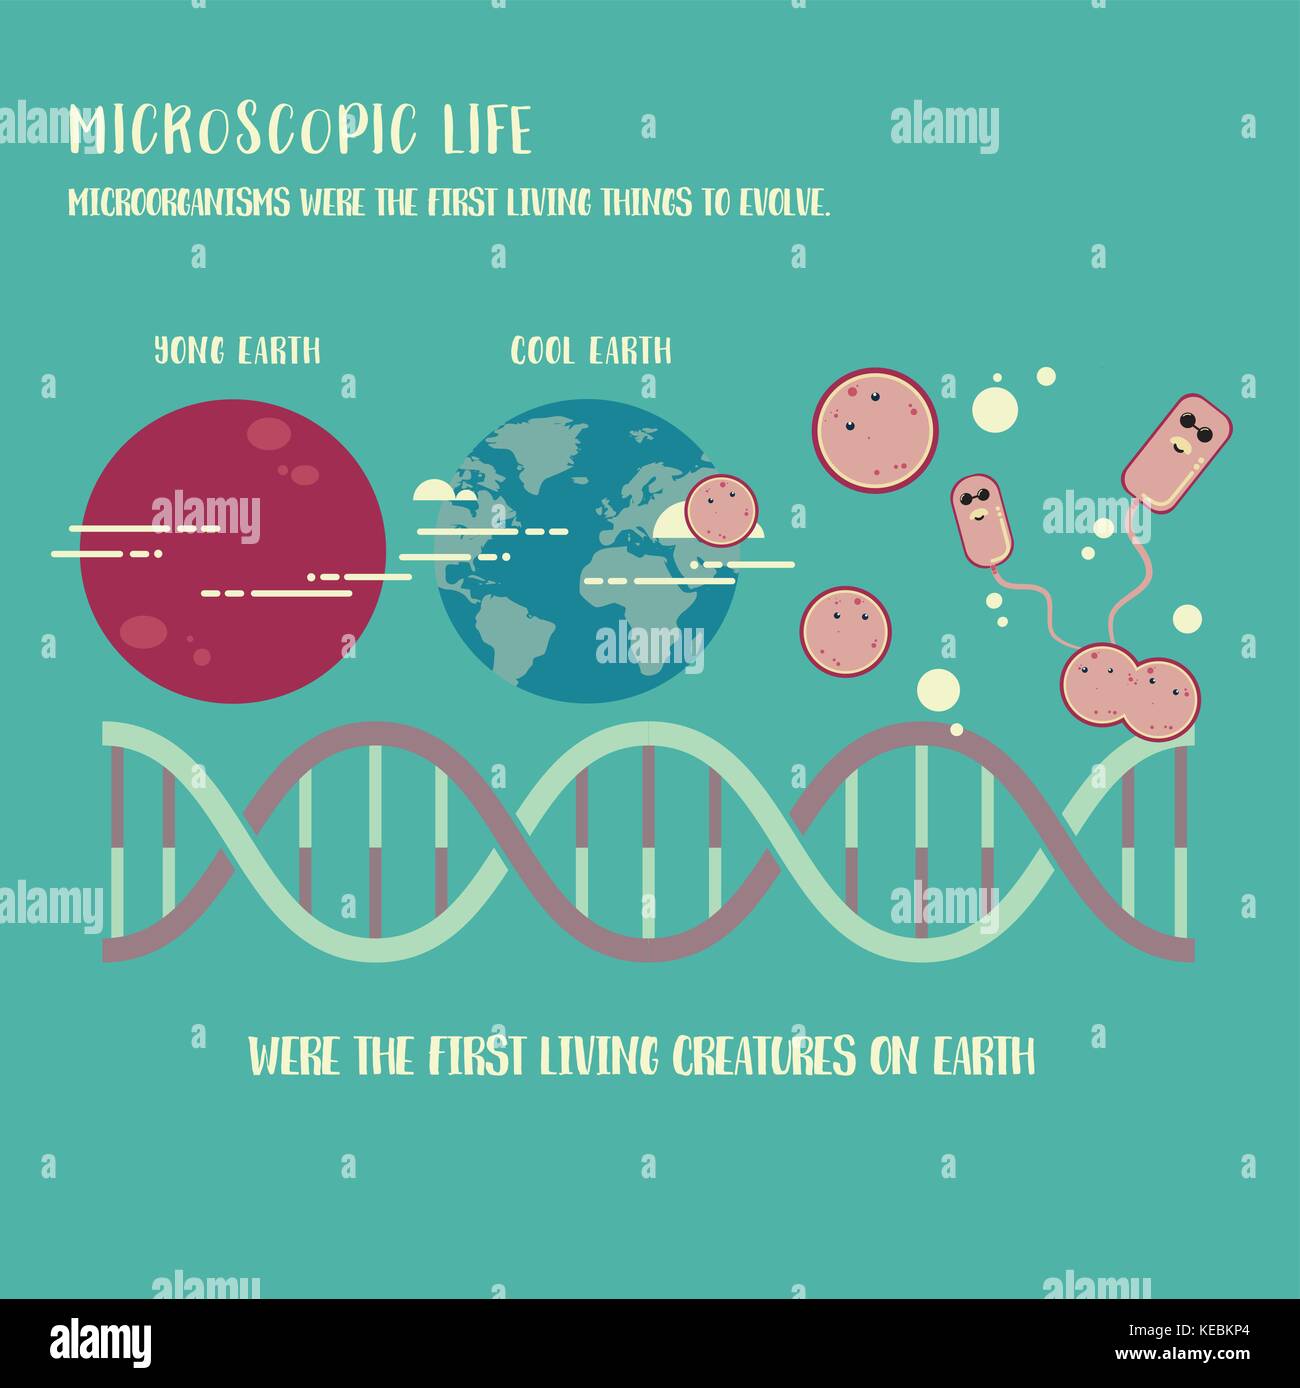 Microorganism life infographic illustration vector Stock Vector